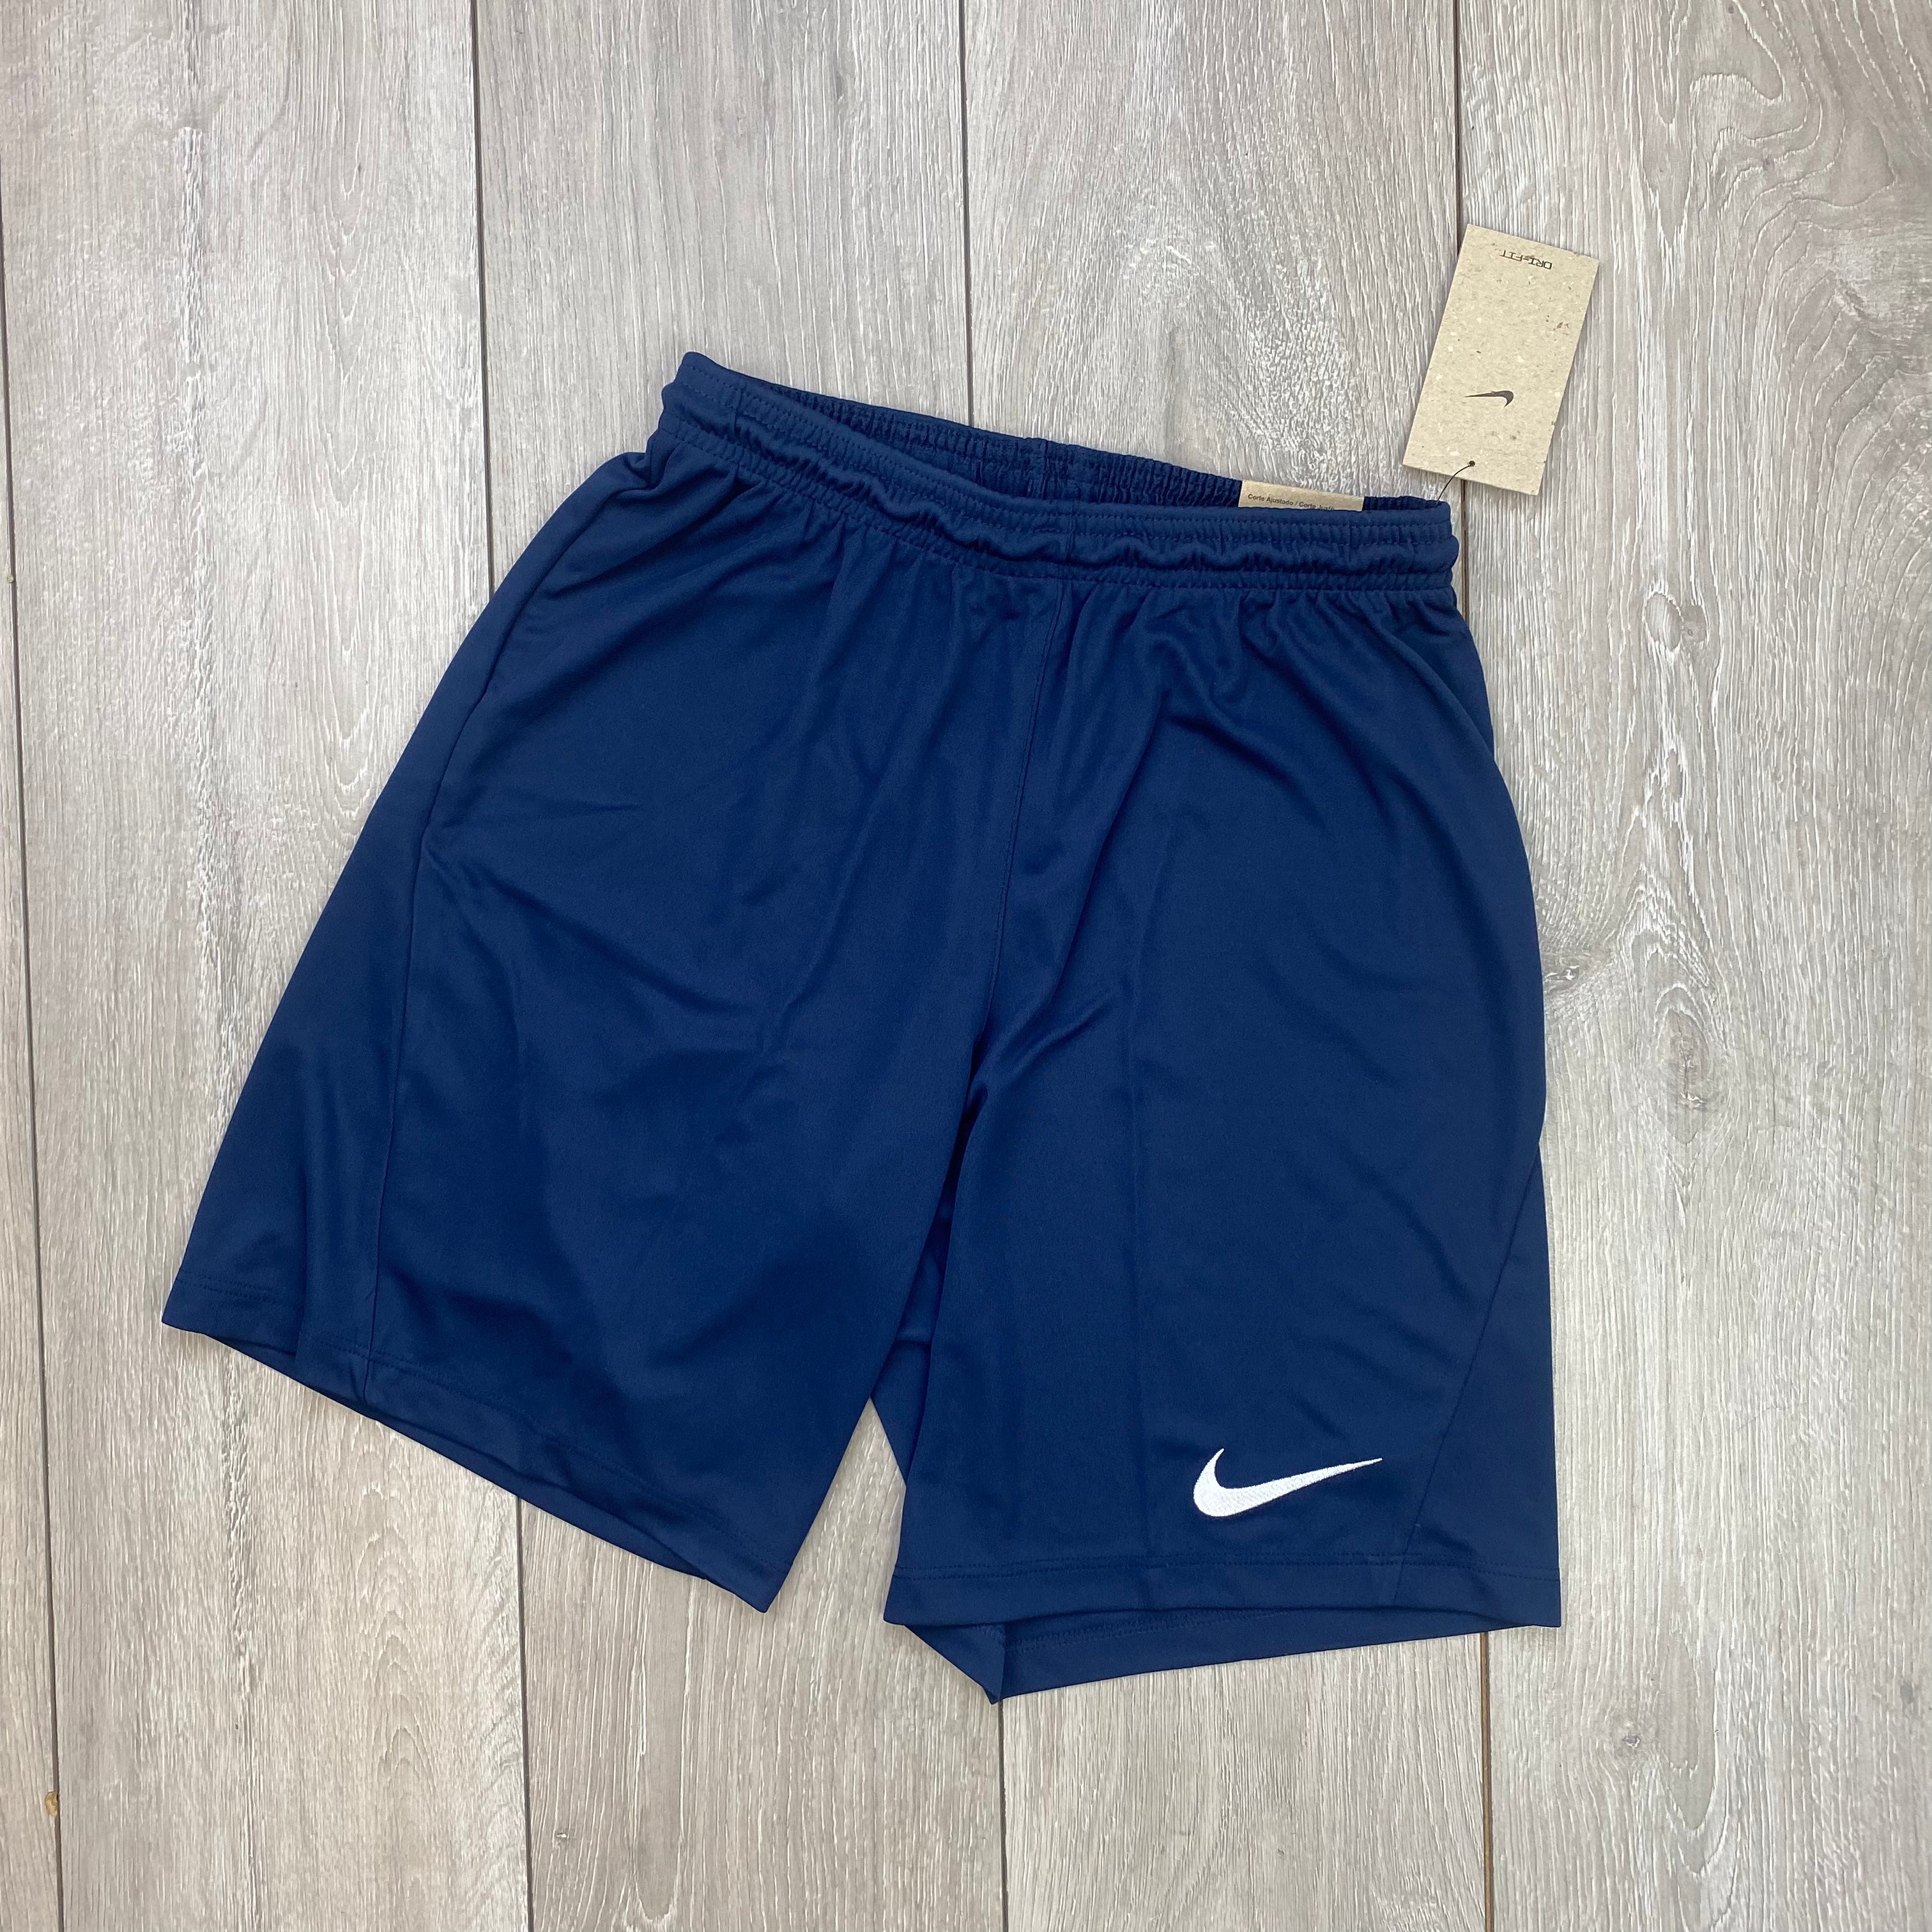 Nike Dri-Fit Shorts - Navy